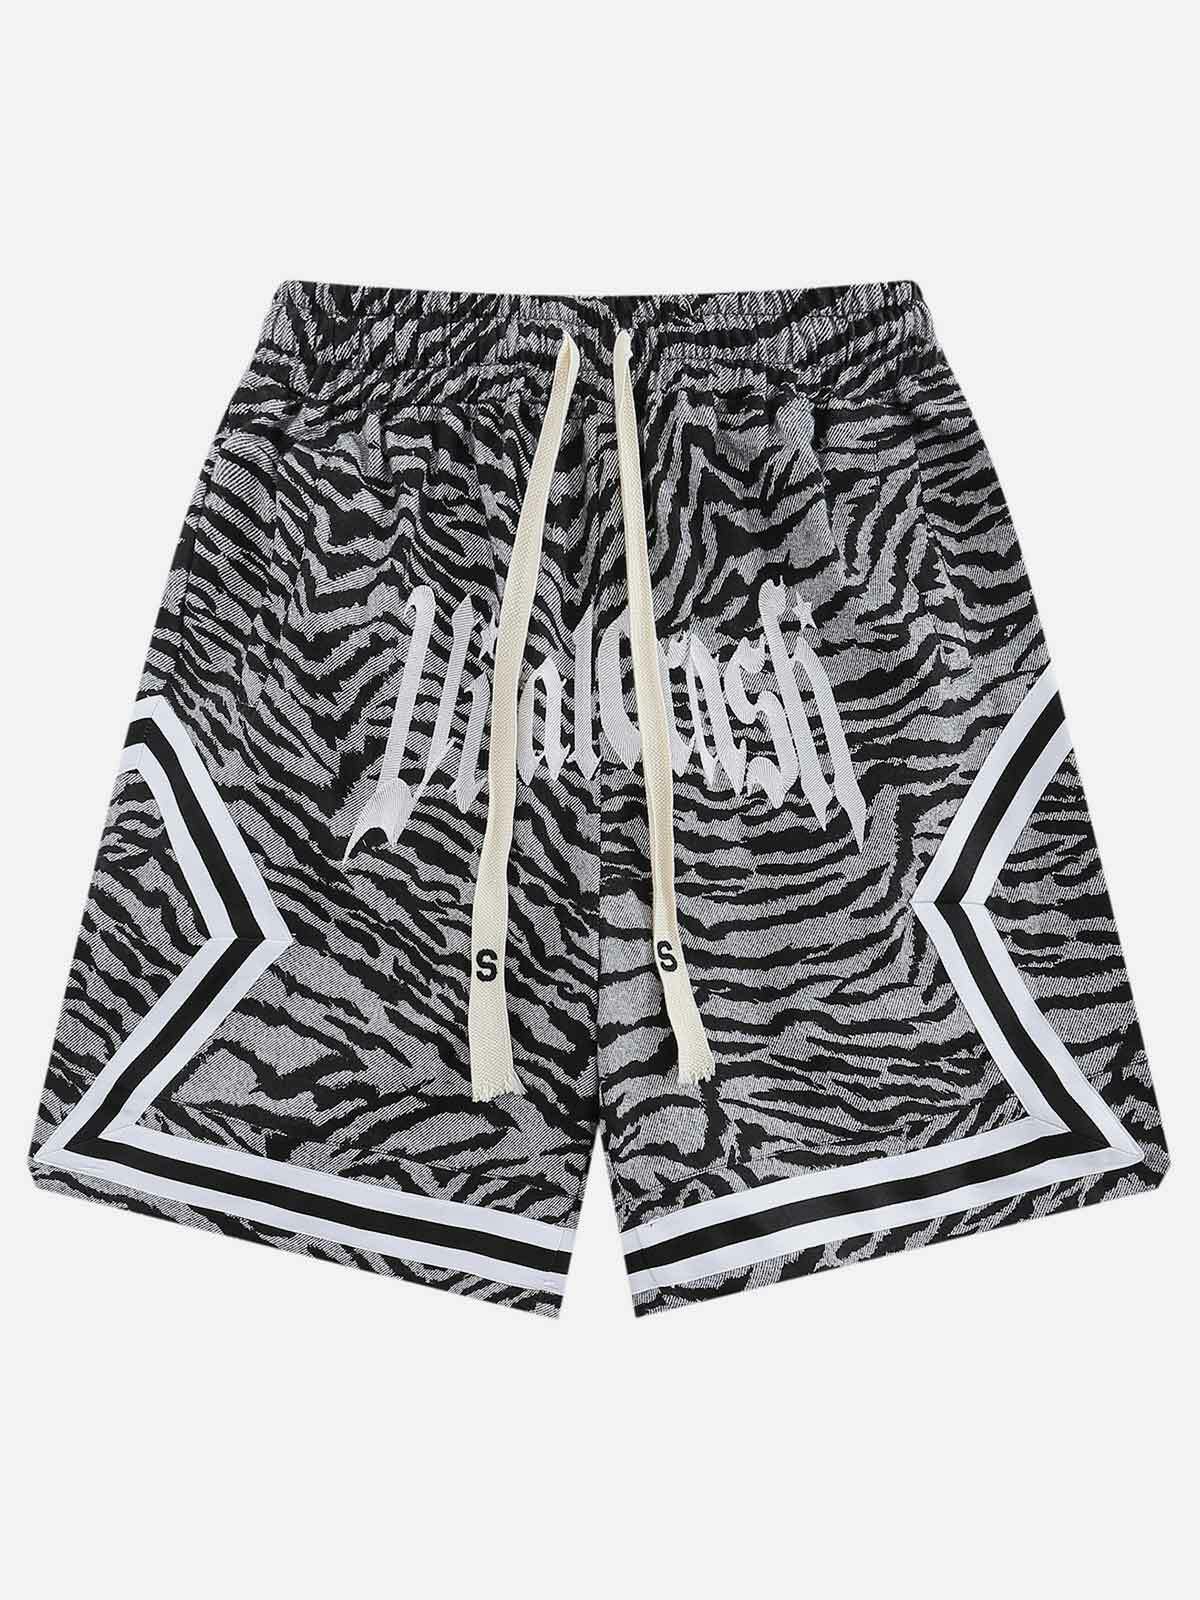 zebra alphabet embroidered shorts edgy & vibrant streetwear 4458